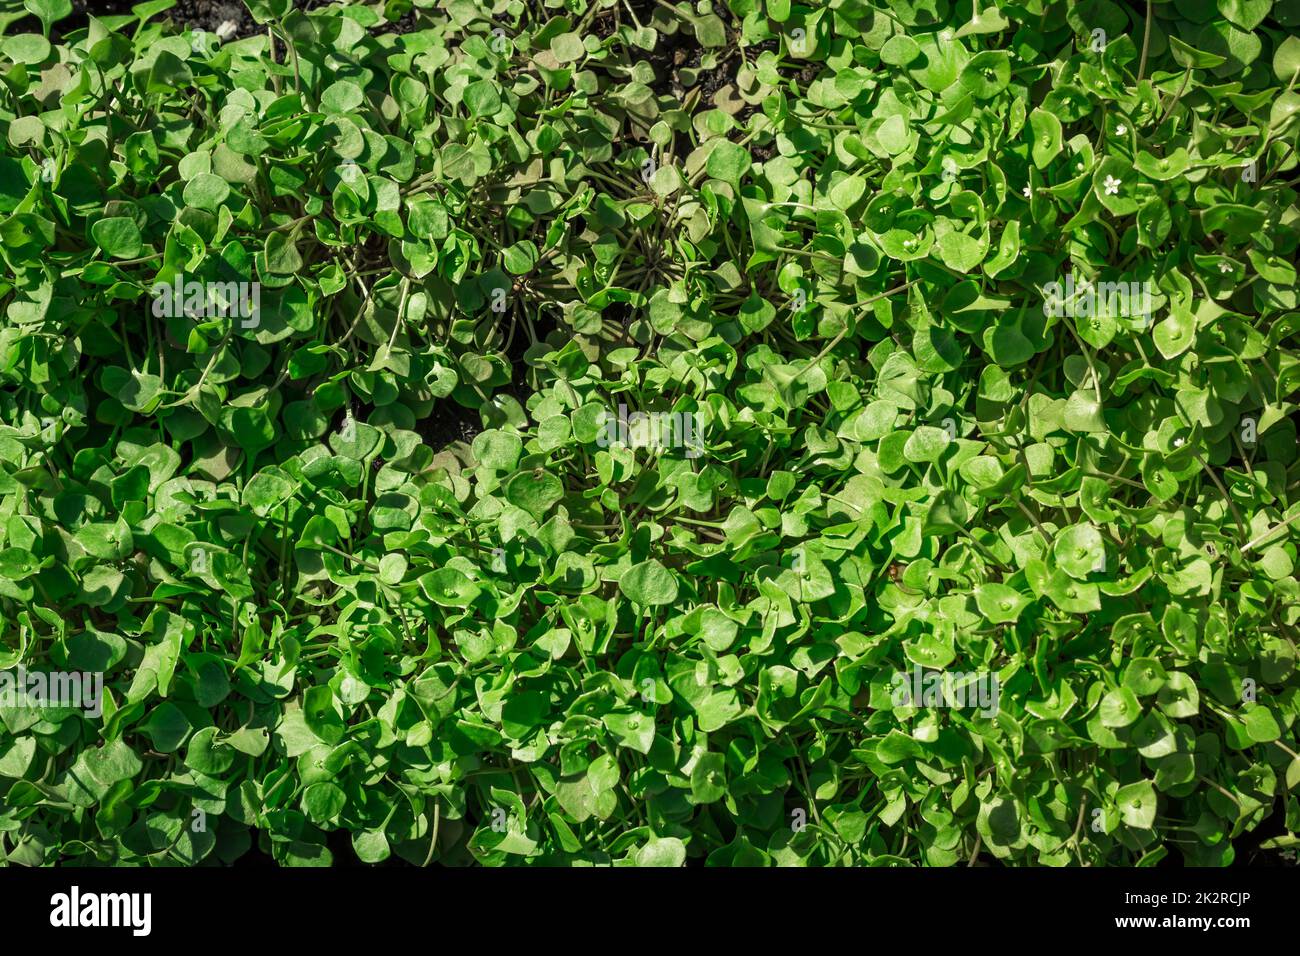 Winter purslane in macro closeup, organic cultivated garden plants, healthy green vegetables. Stock Photo